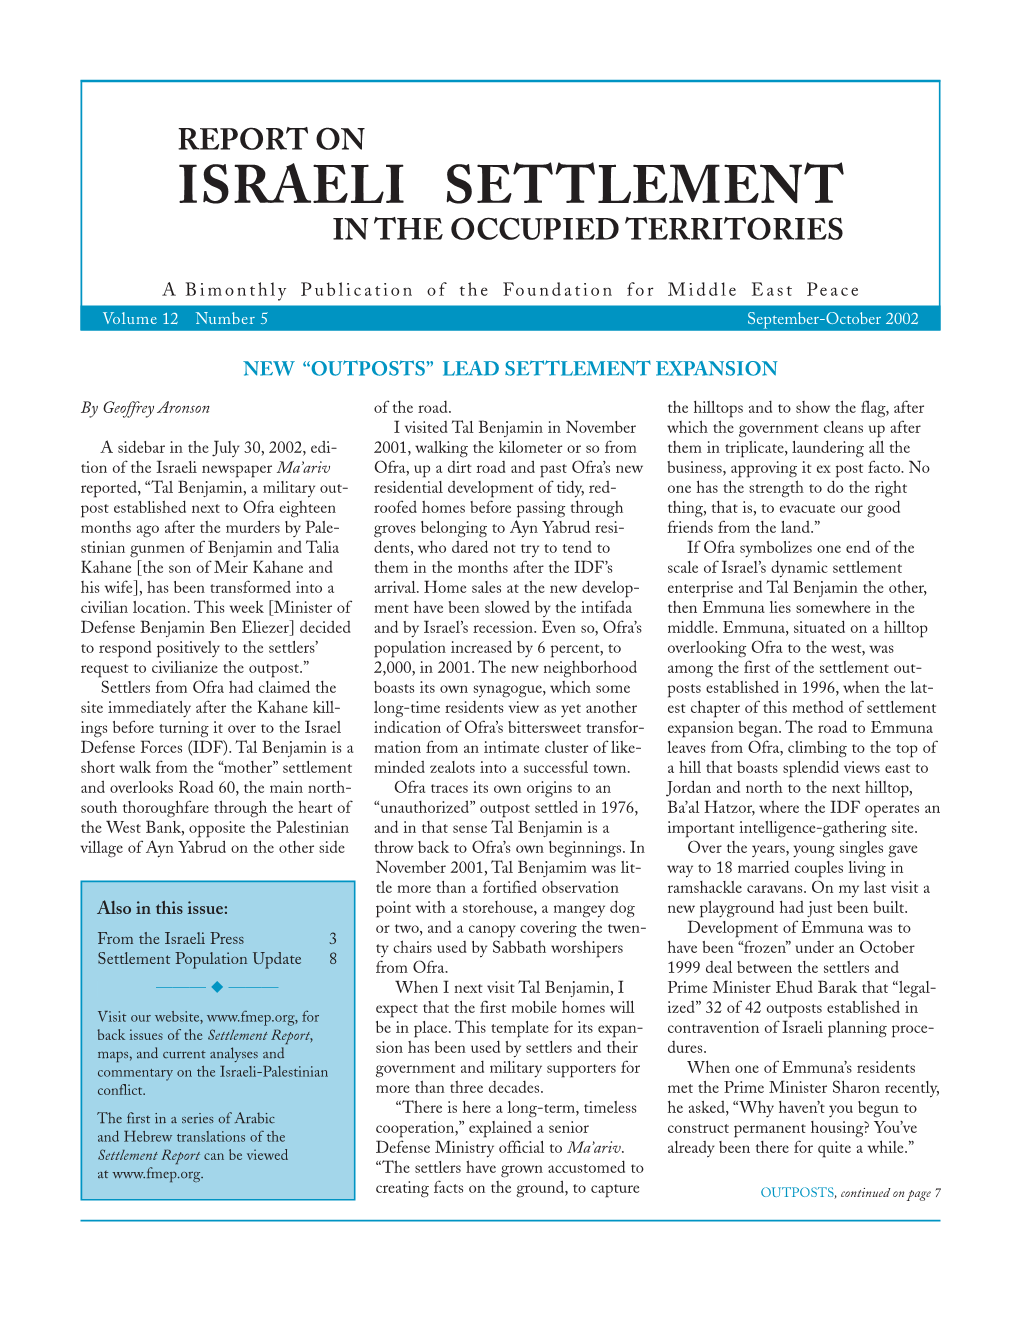 Report on Israeli Settlement in the Occupied Territories, September